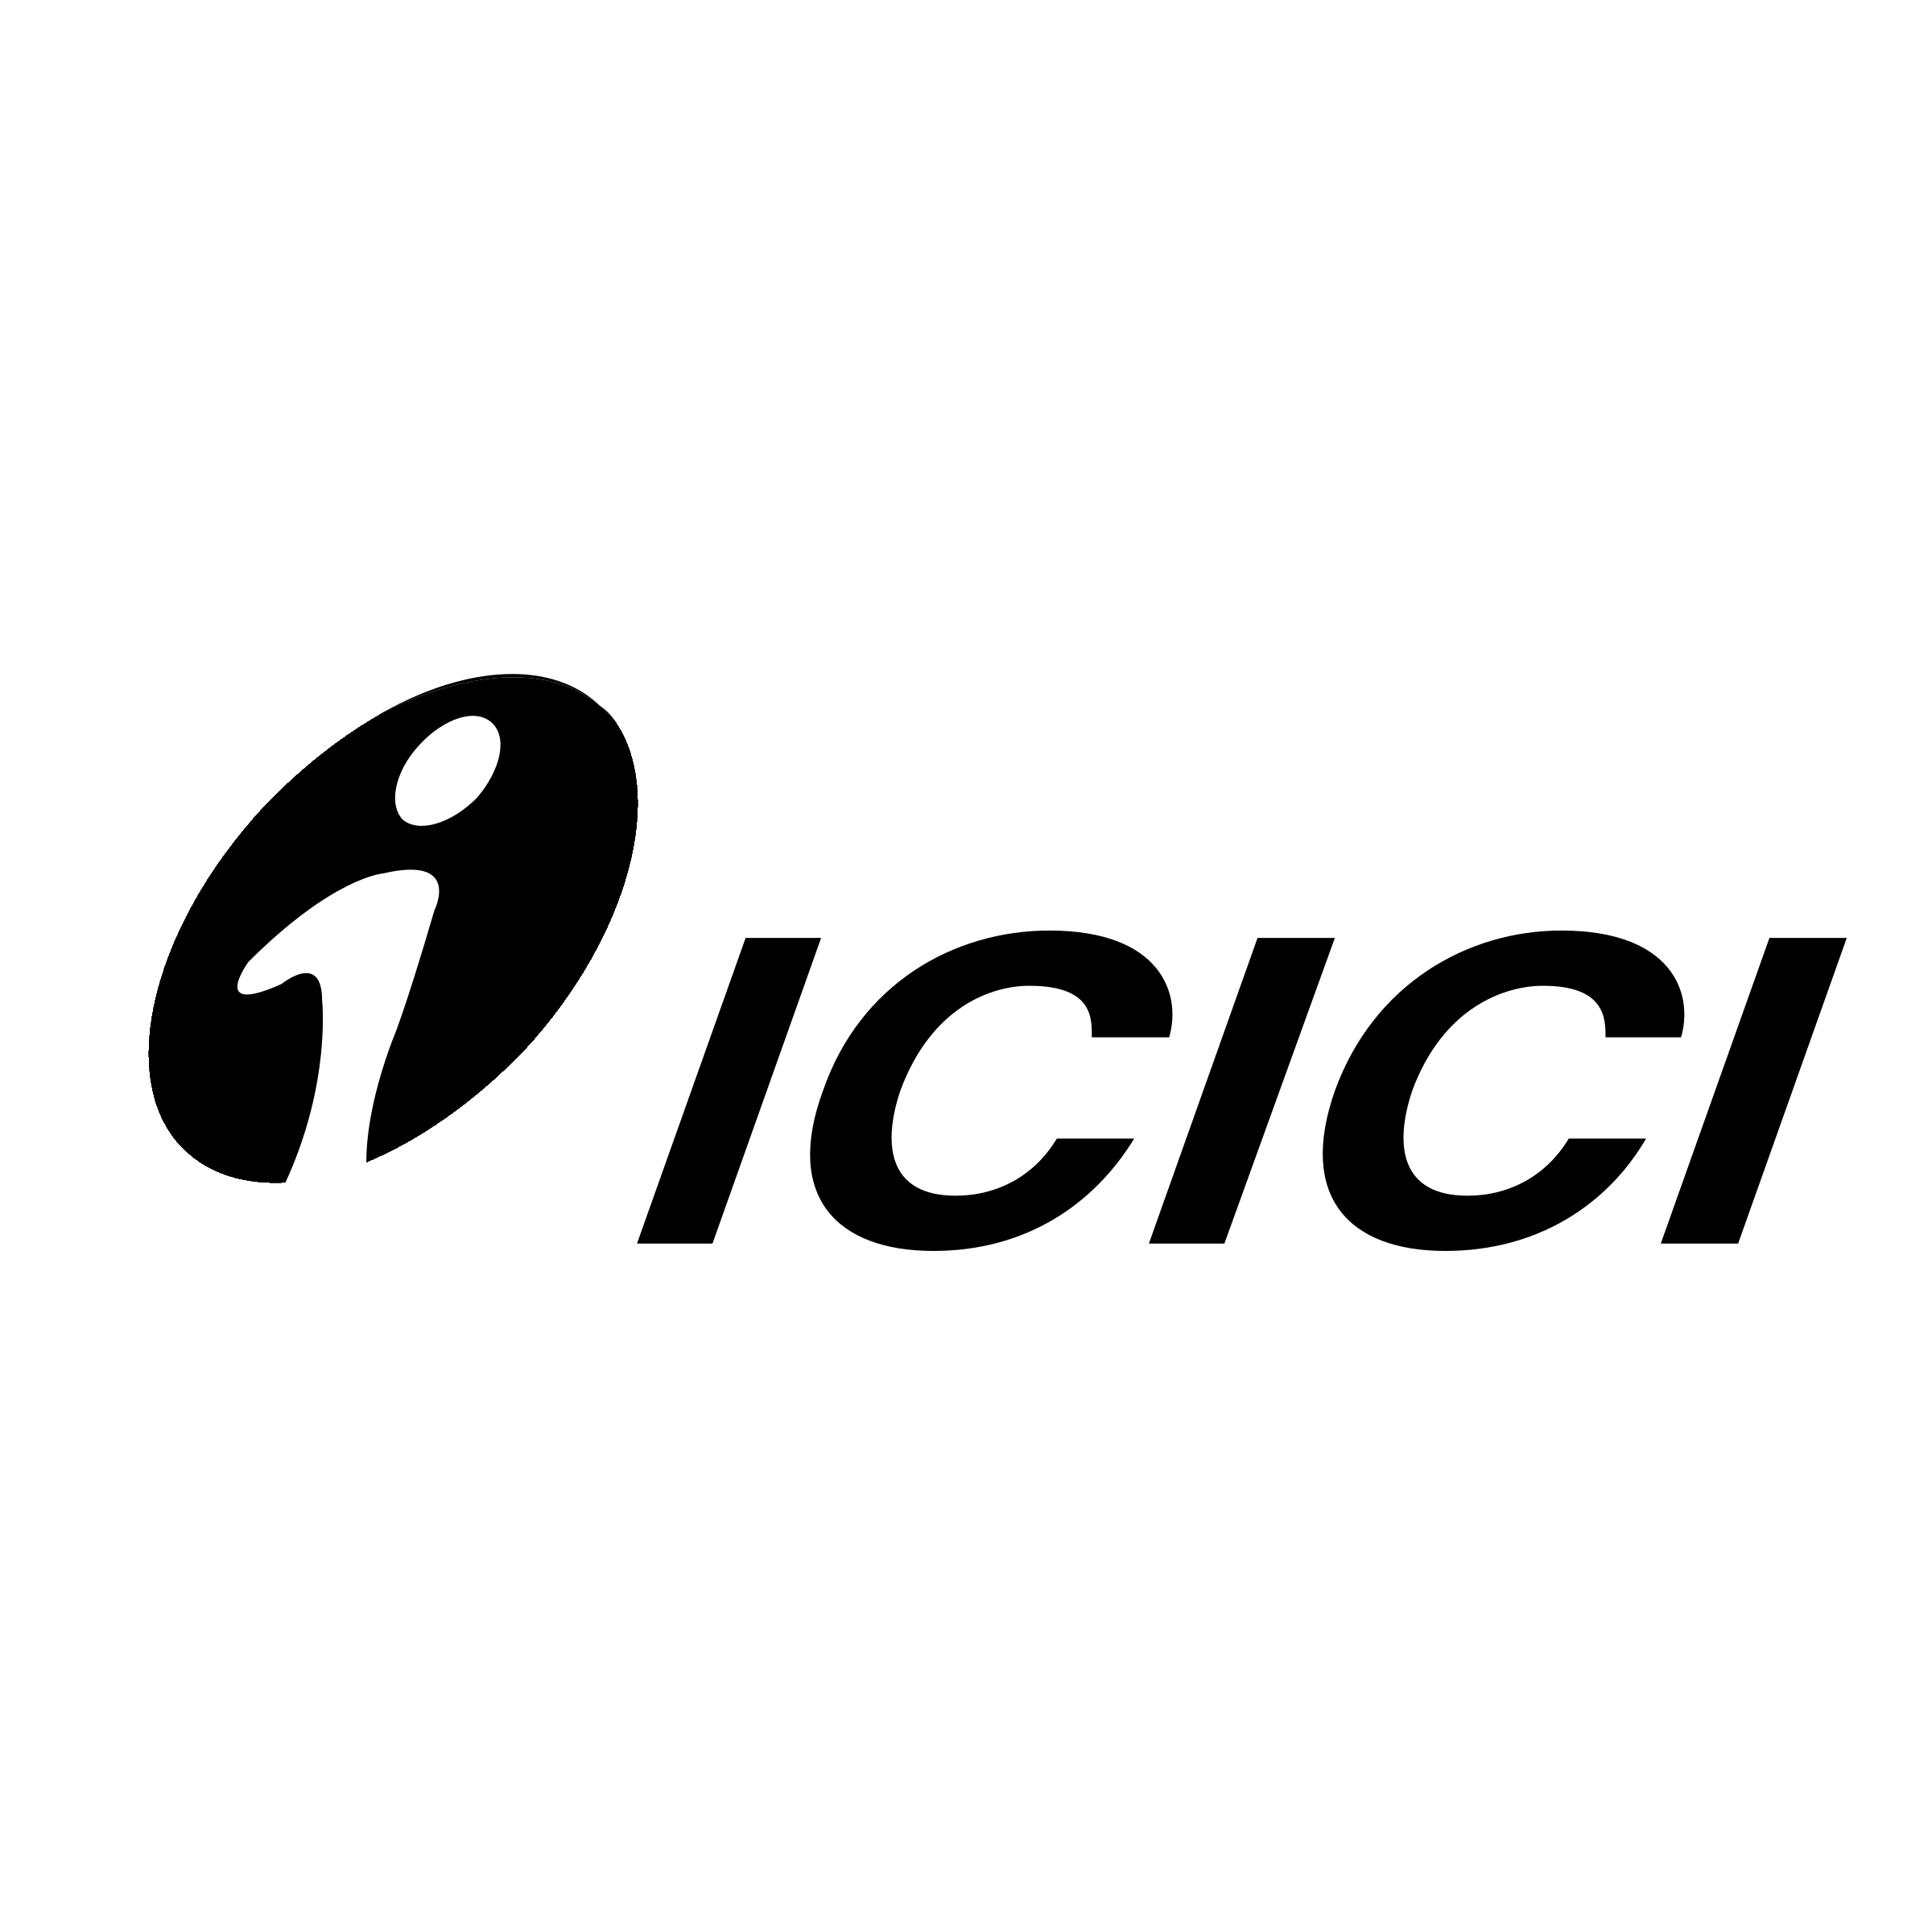 ICICI Bank Logo - ICICI Logo PNG Transparent & SVG Vector ...